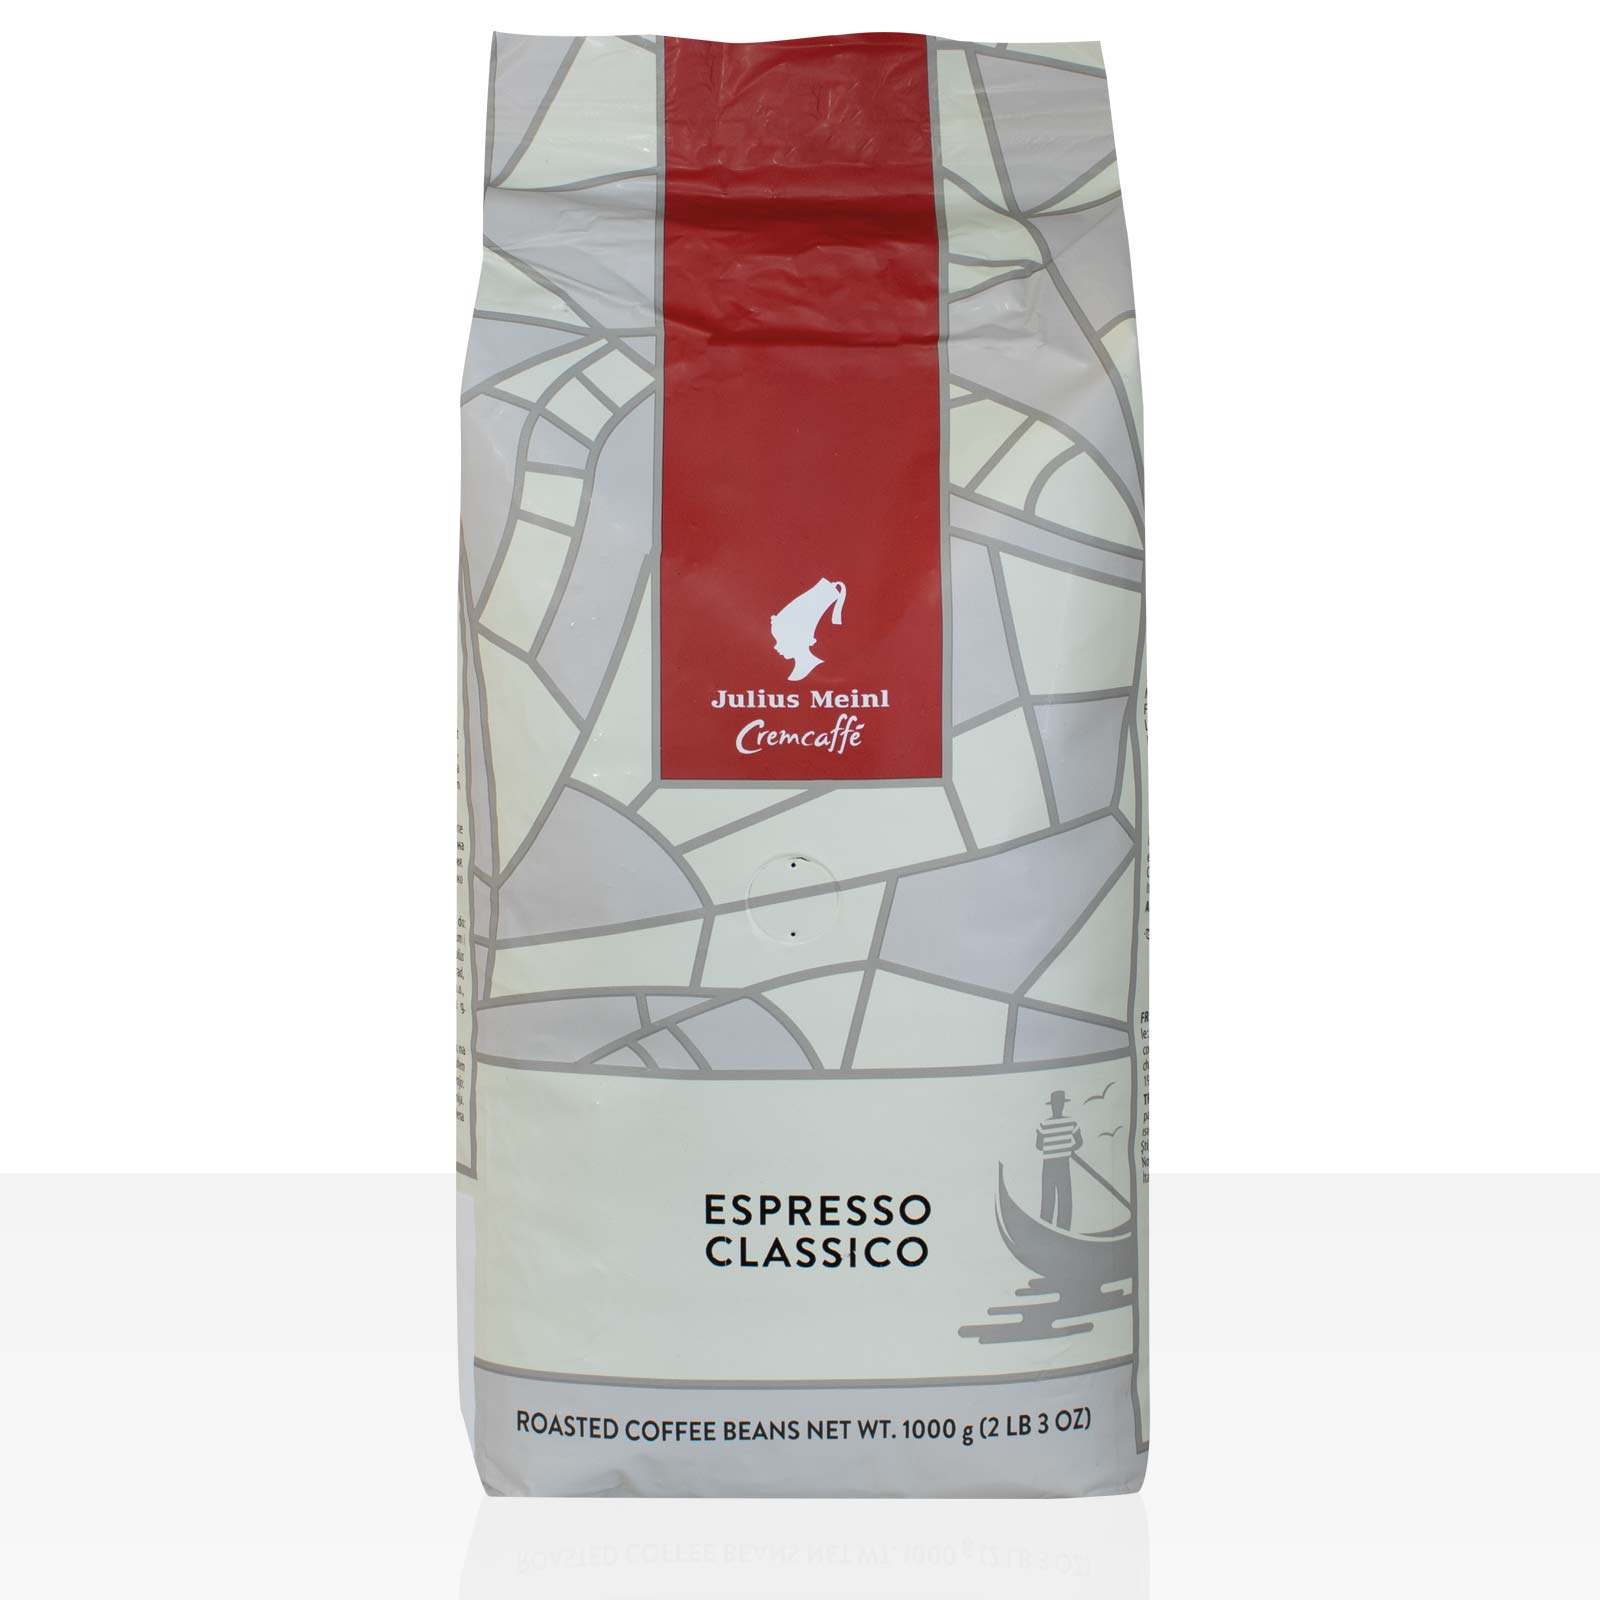 Julius Meinl Crema Espresso Classico 6 x 1kg ganze Kaffee-Bohnen